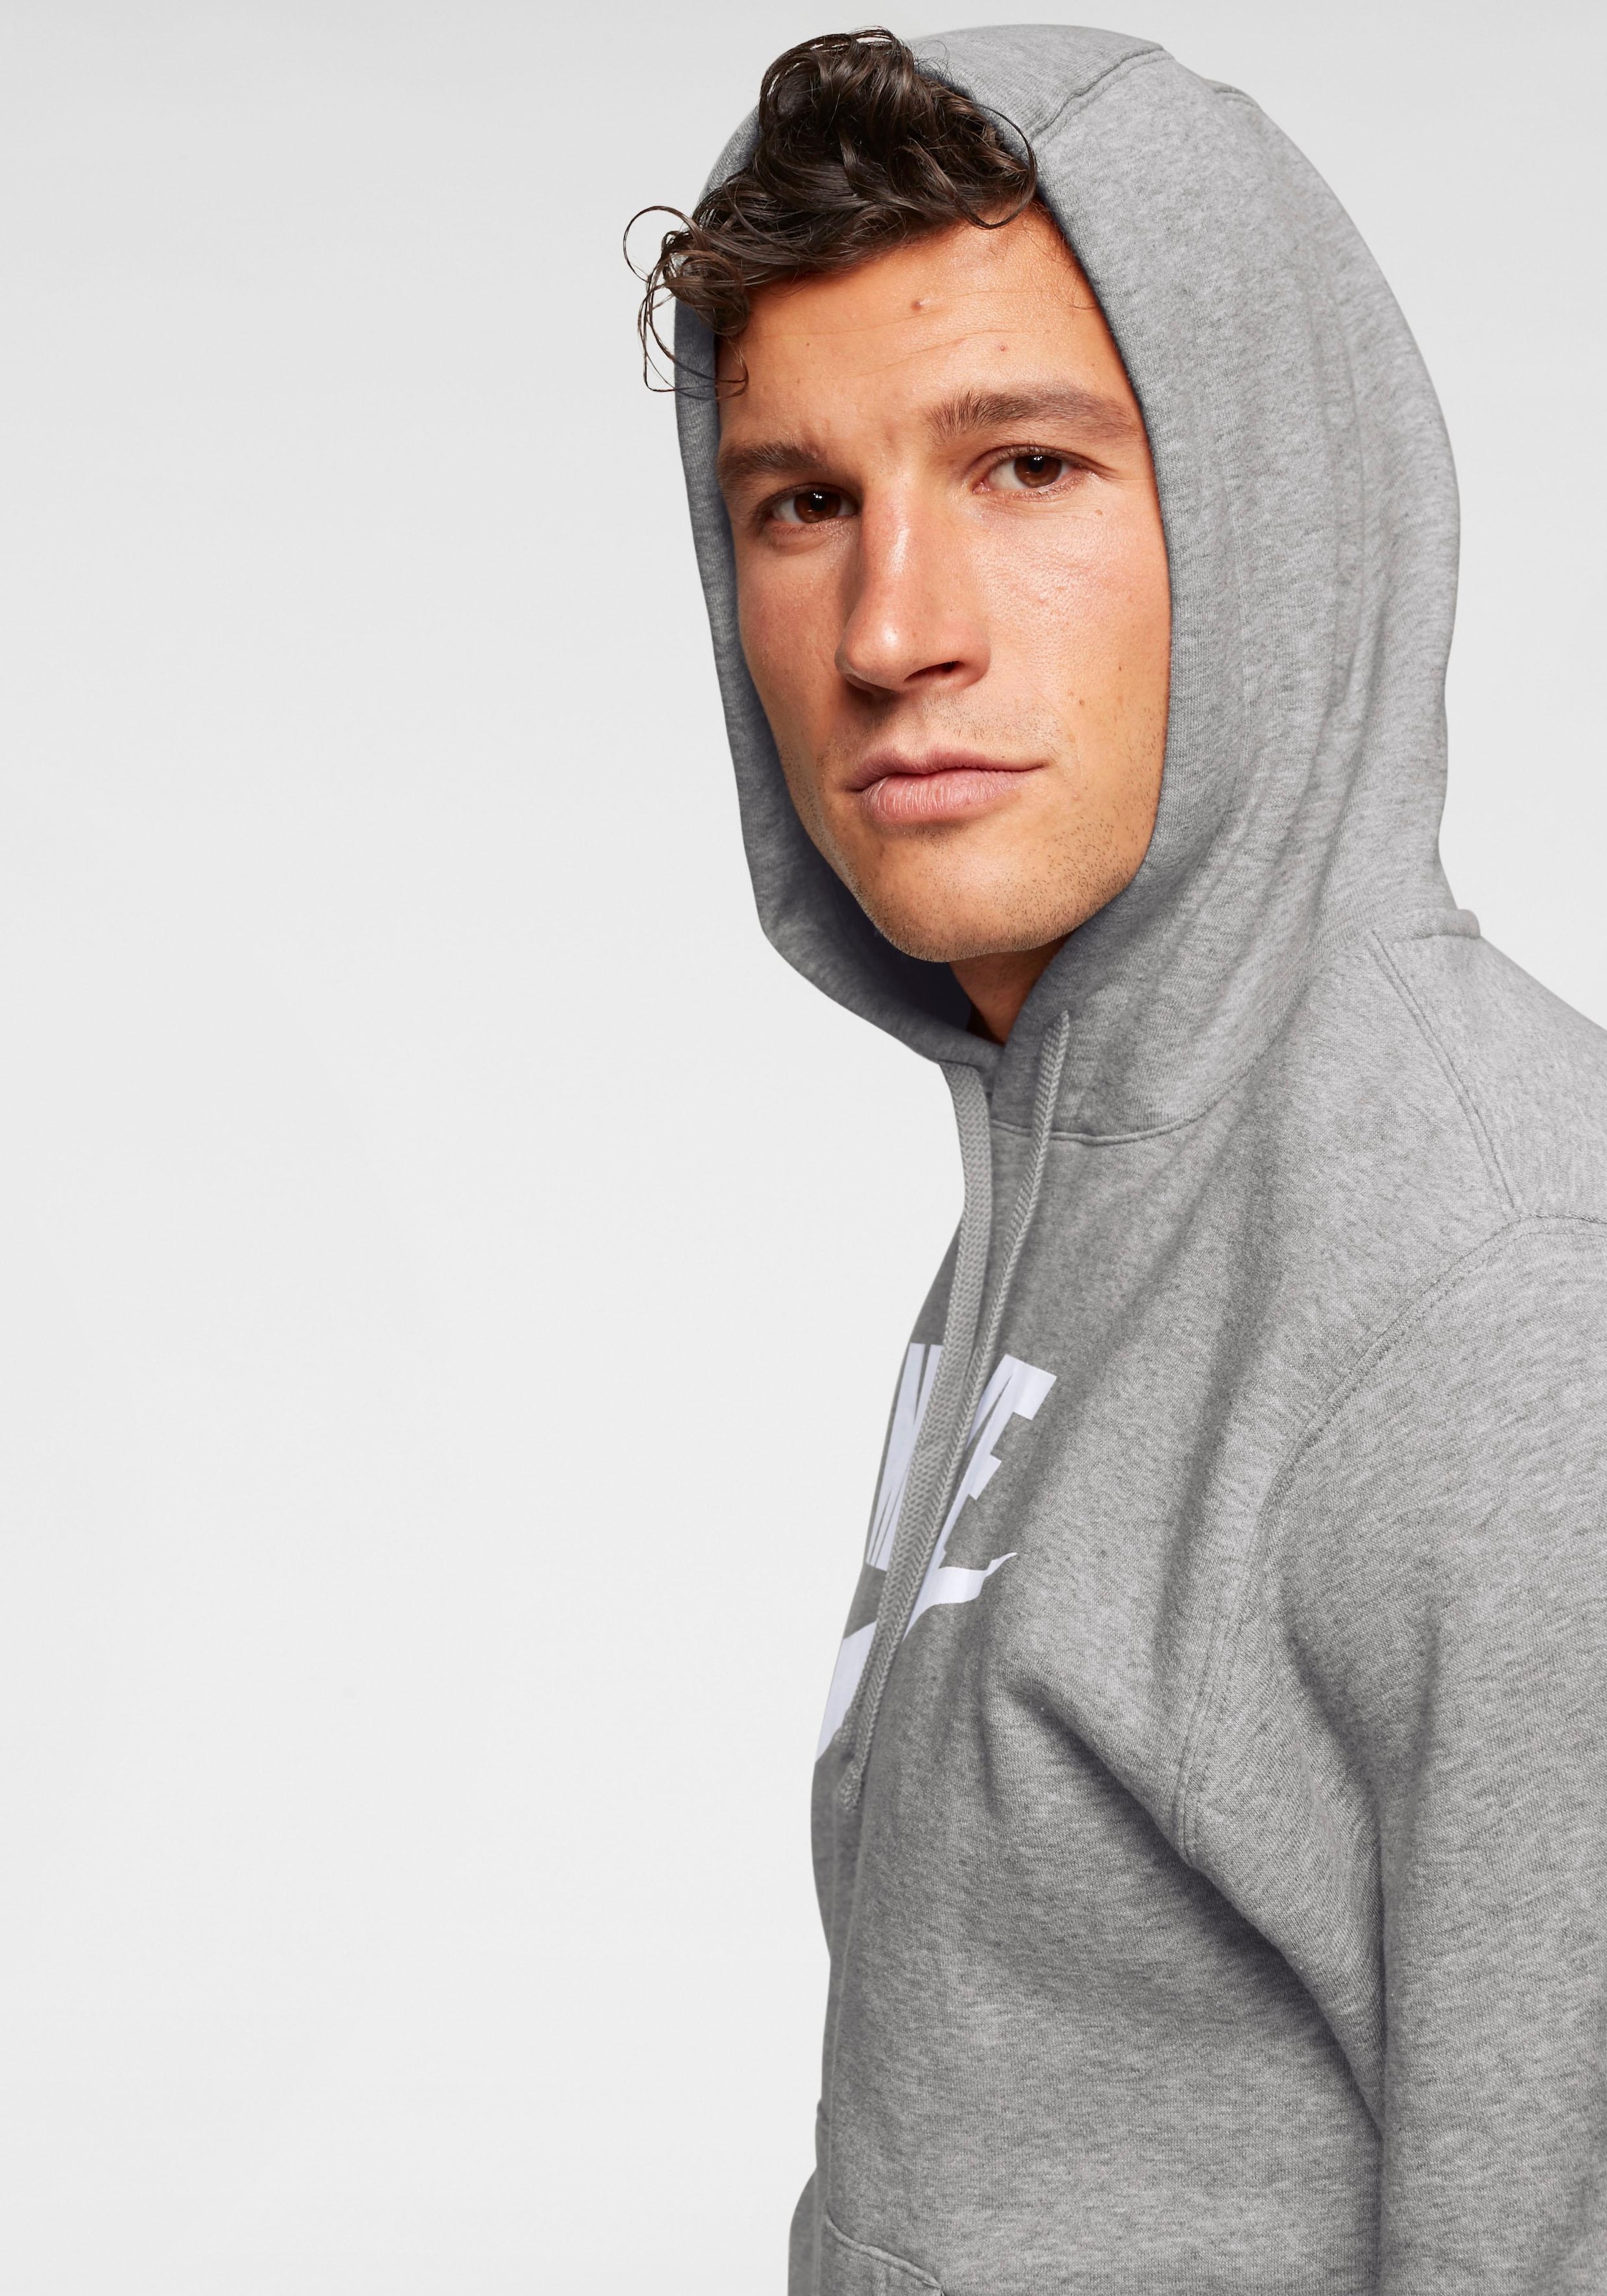 Nike Sportswear Kapuzensweatshirt »Club Fleece Men's Graphic Pullover Hoodie«